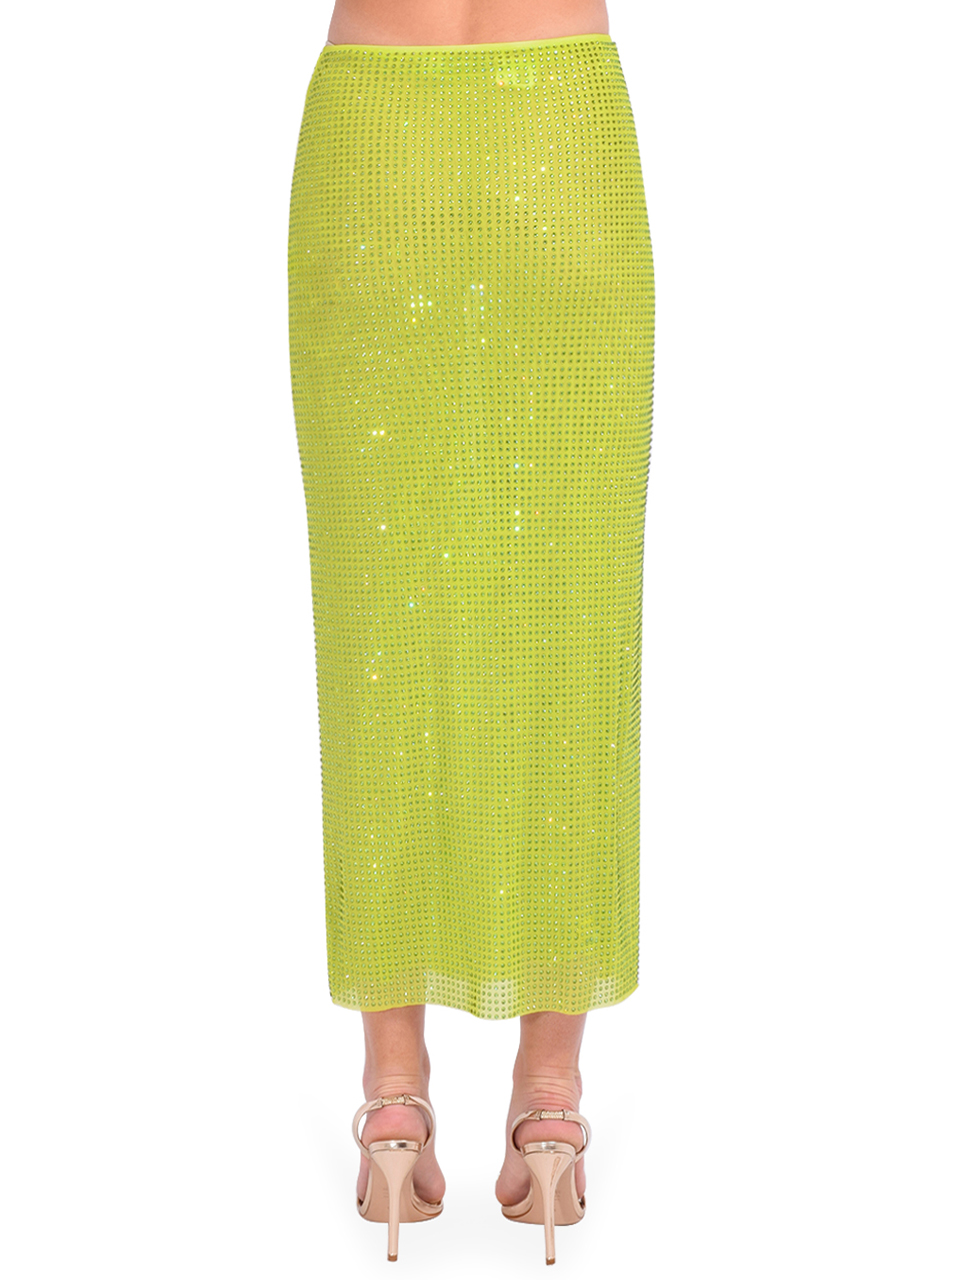 SELF-PORTRAIT Hotfix Mesh Midi Skirt in Green Back View 